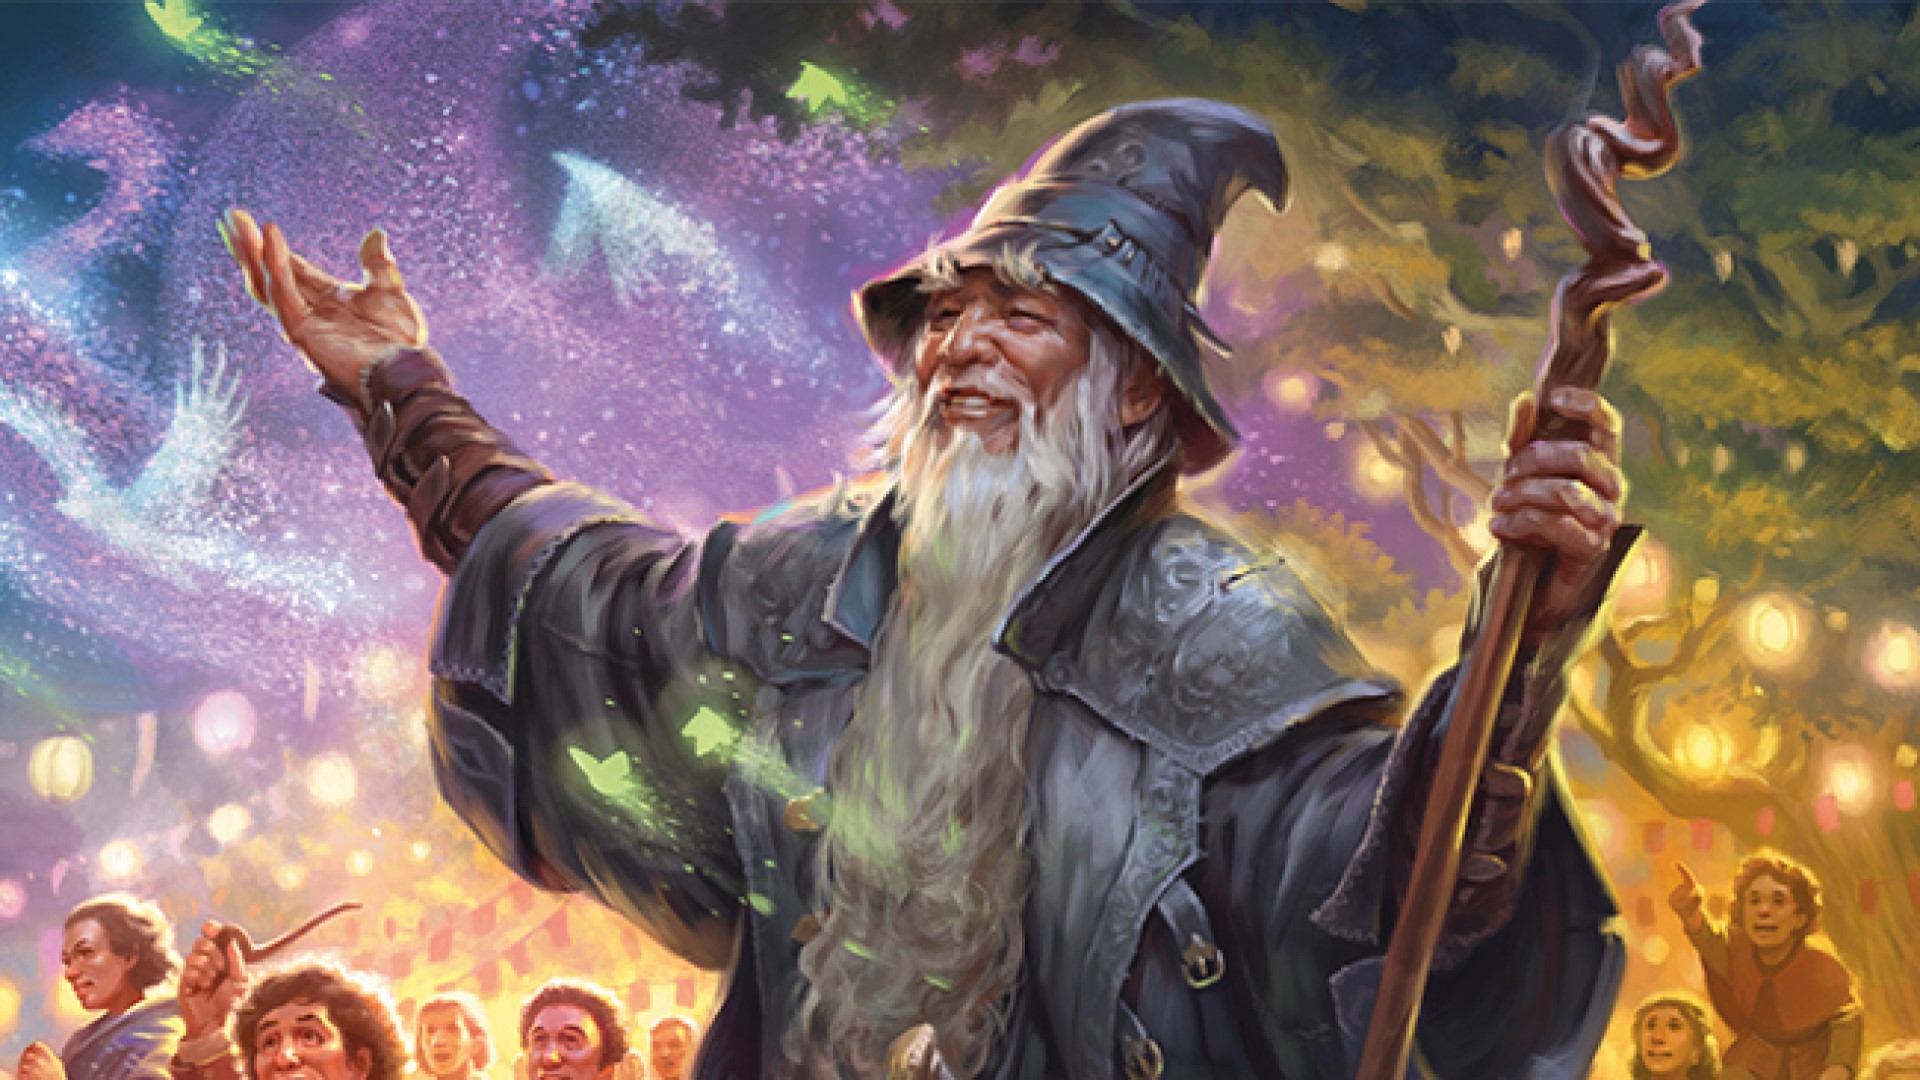 MTG Standard dying - Gandalf creating fireworks